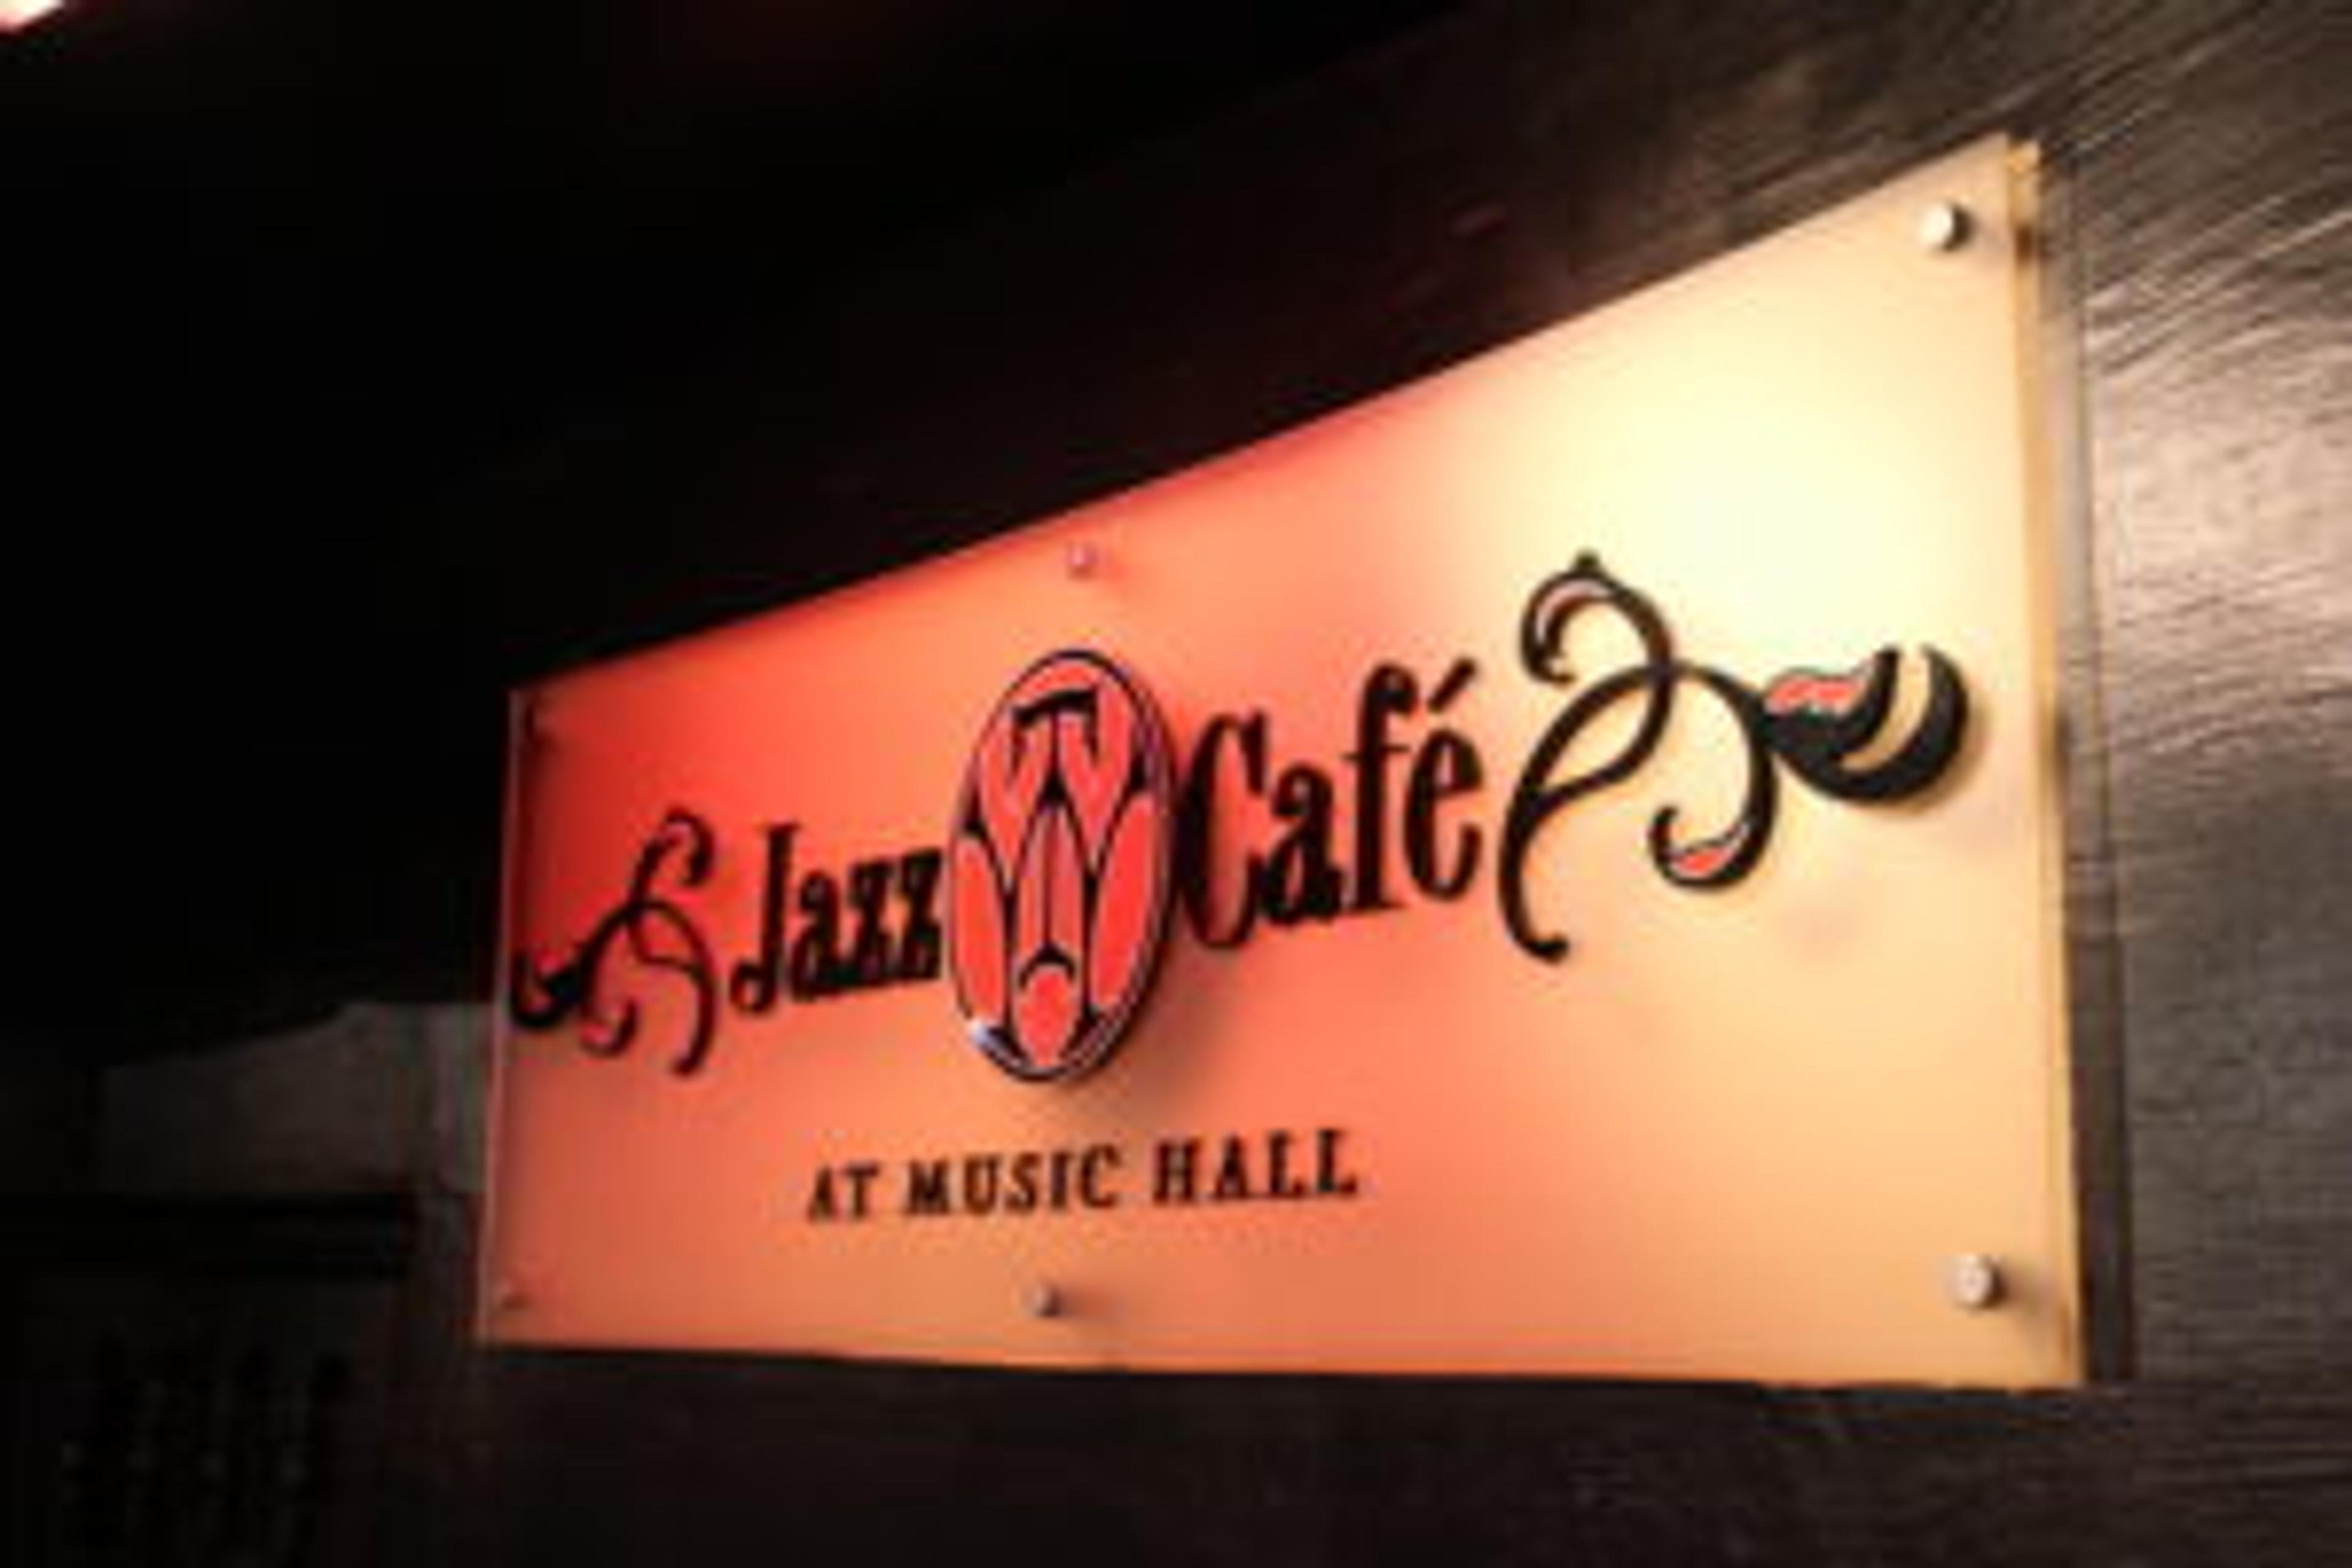 Music Hall - Detroit - Jazz Cafe